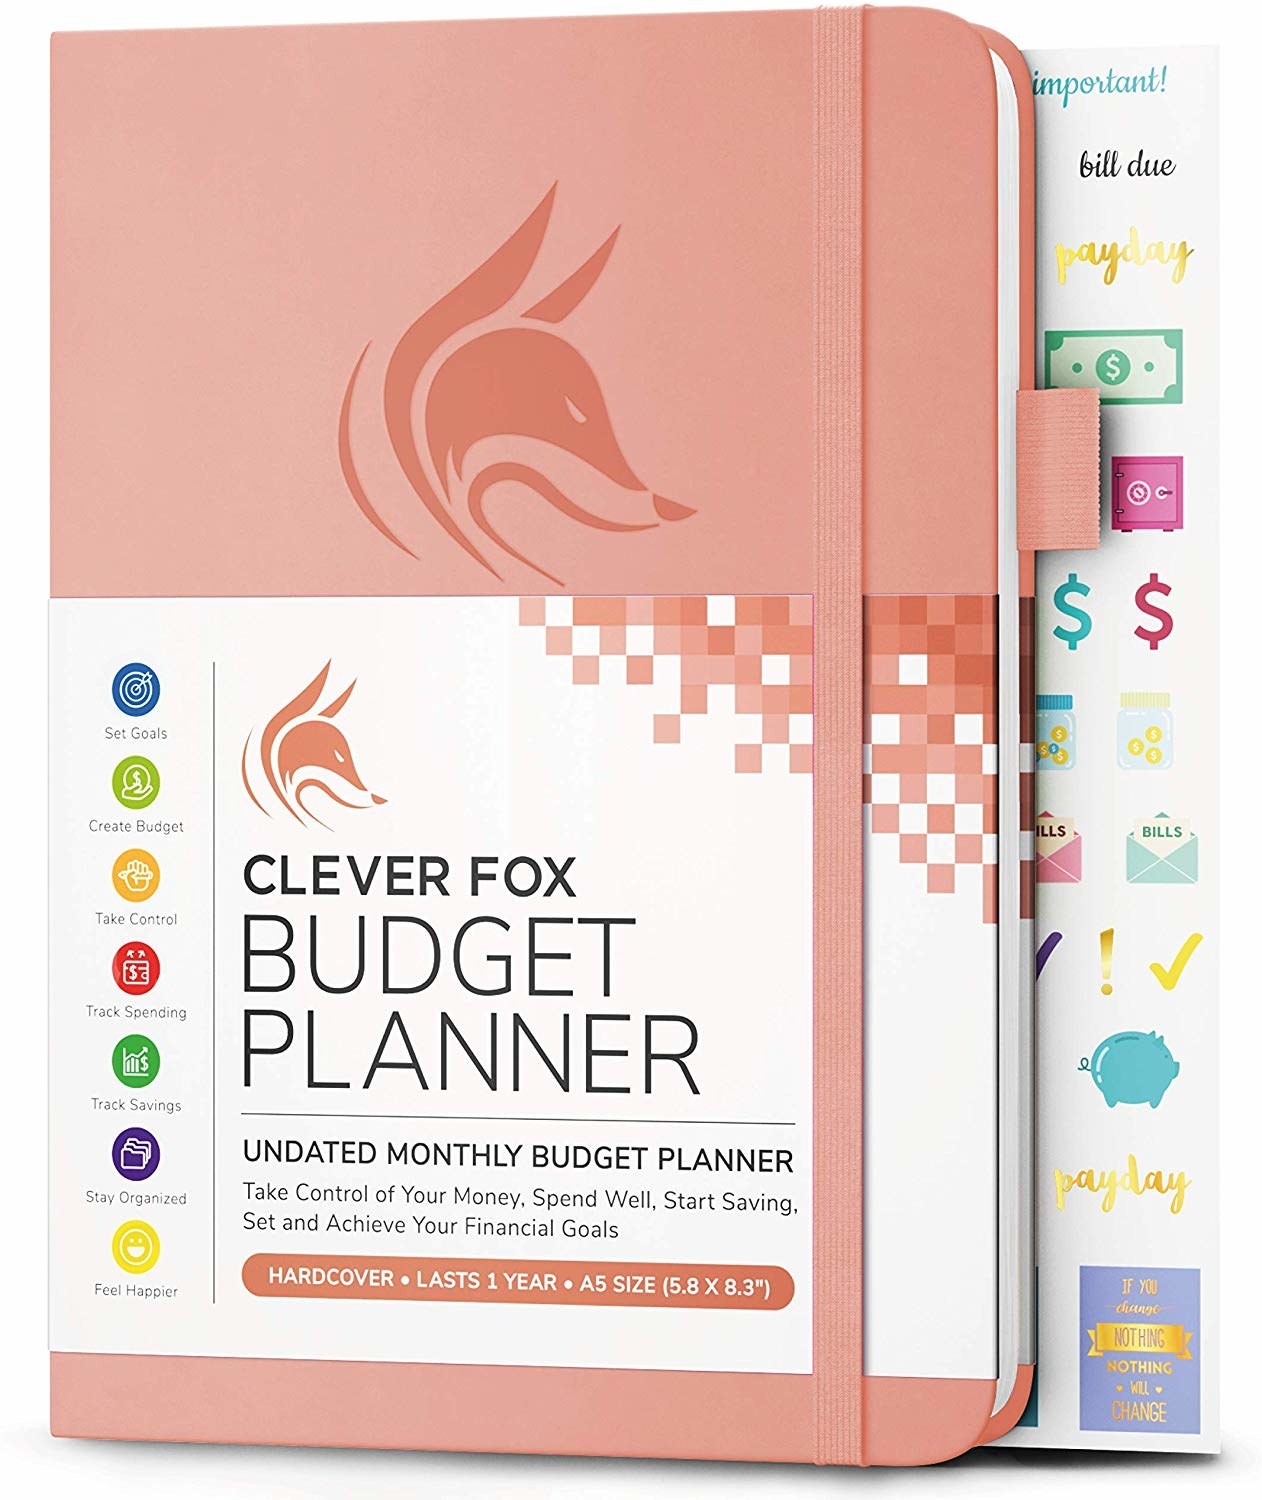 A pink budget planner